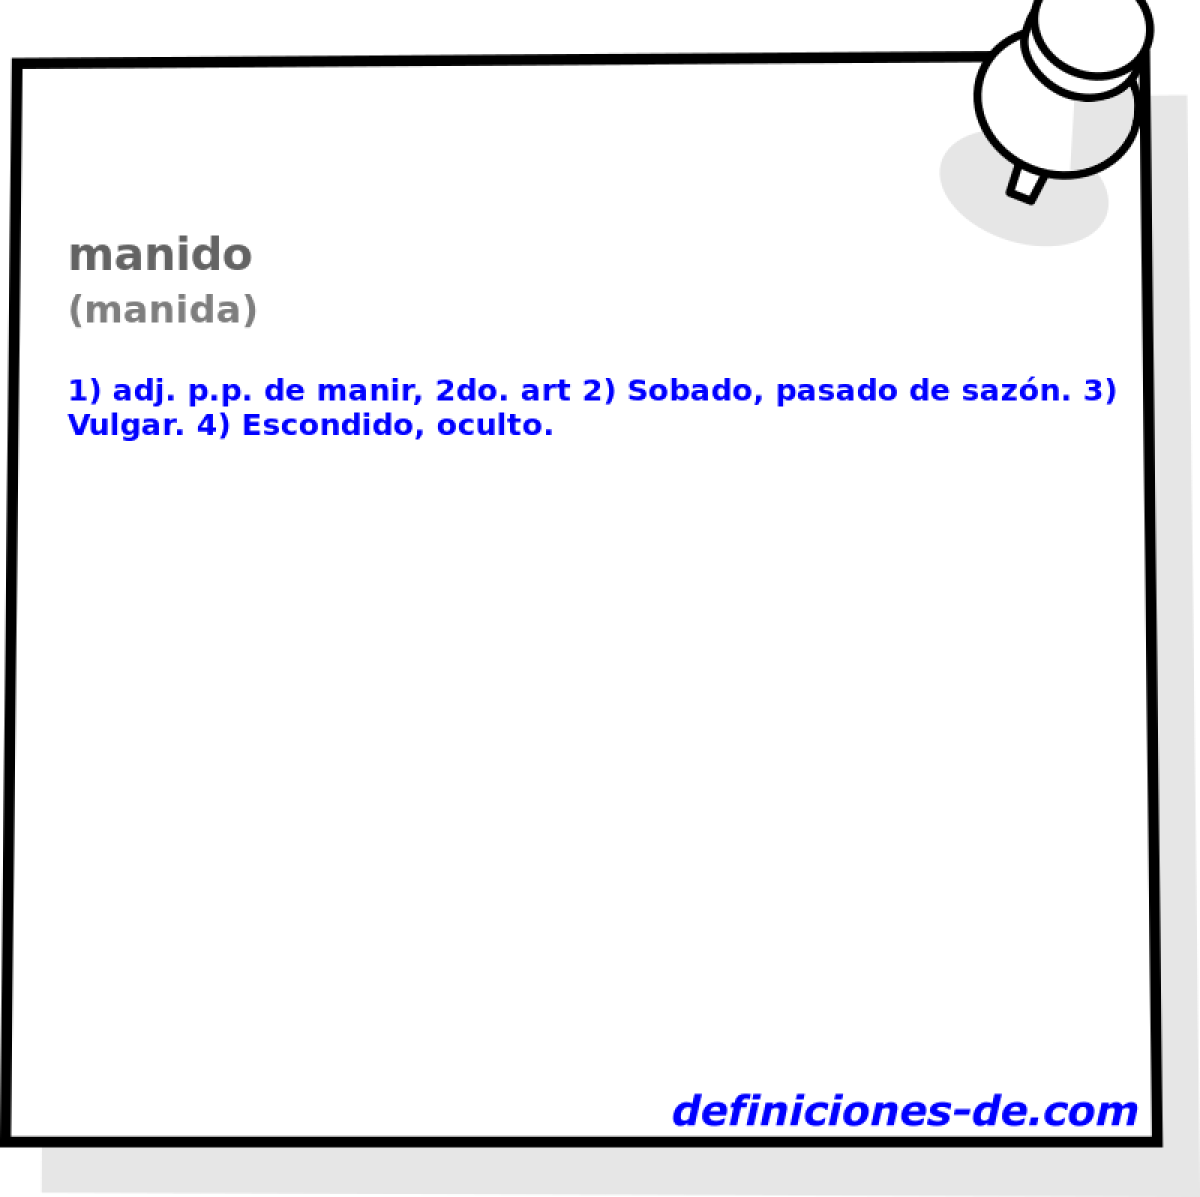 manido (manida)